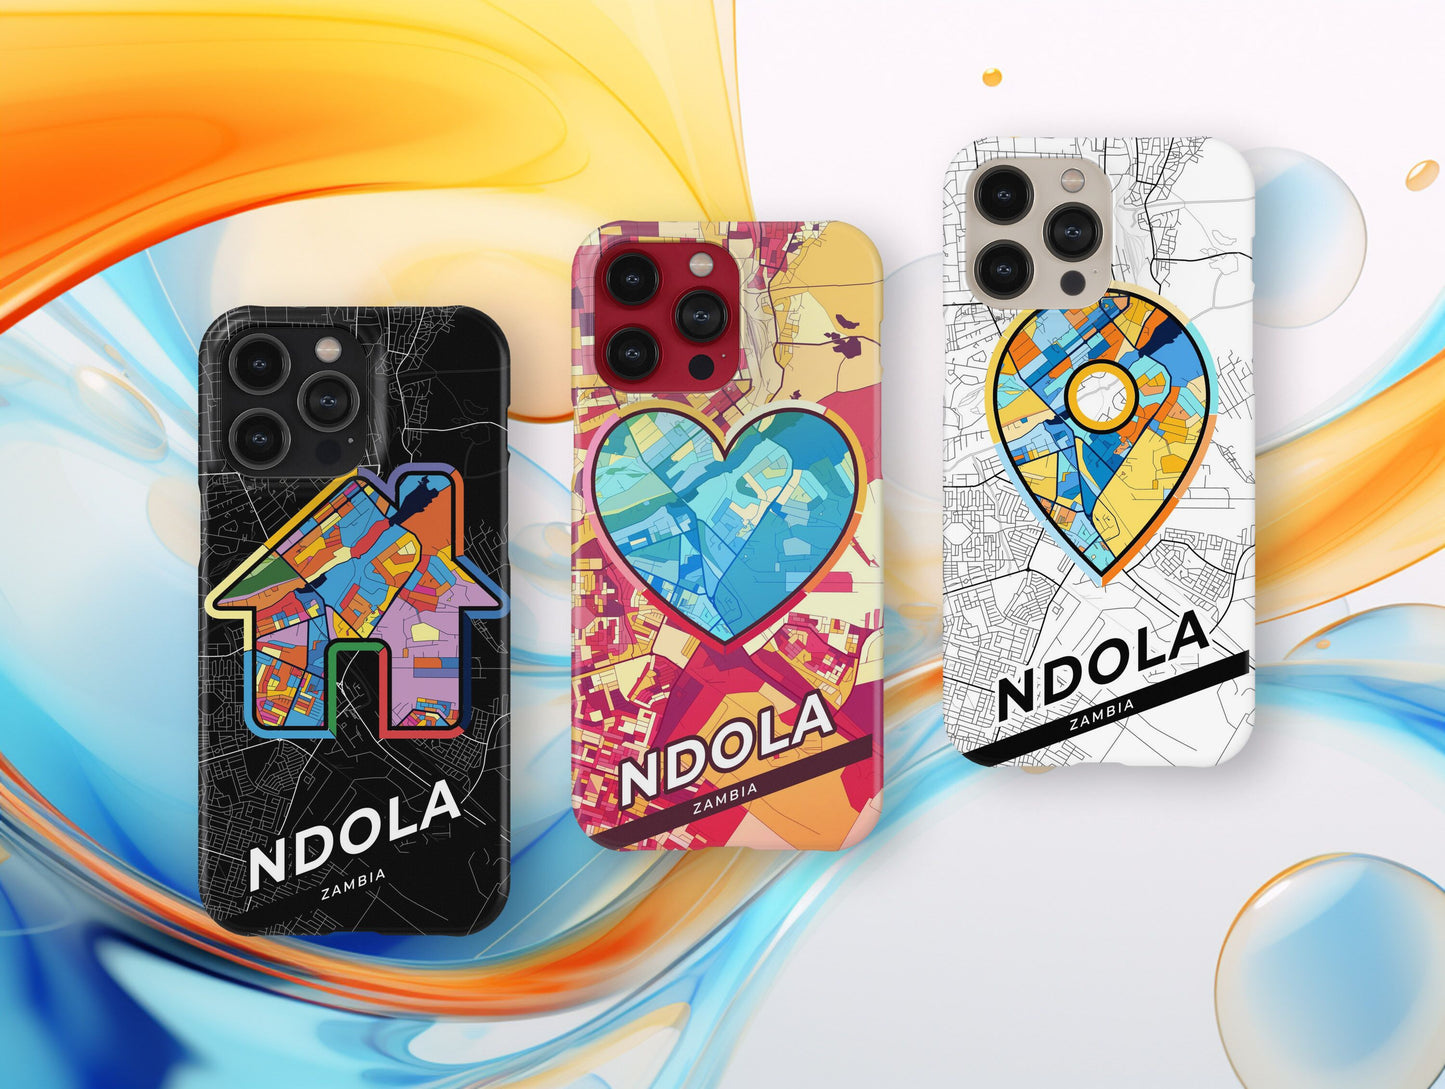 Ndola Zambia slim phone case with colorful icon